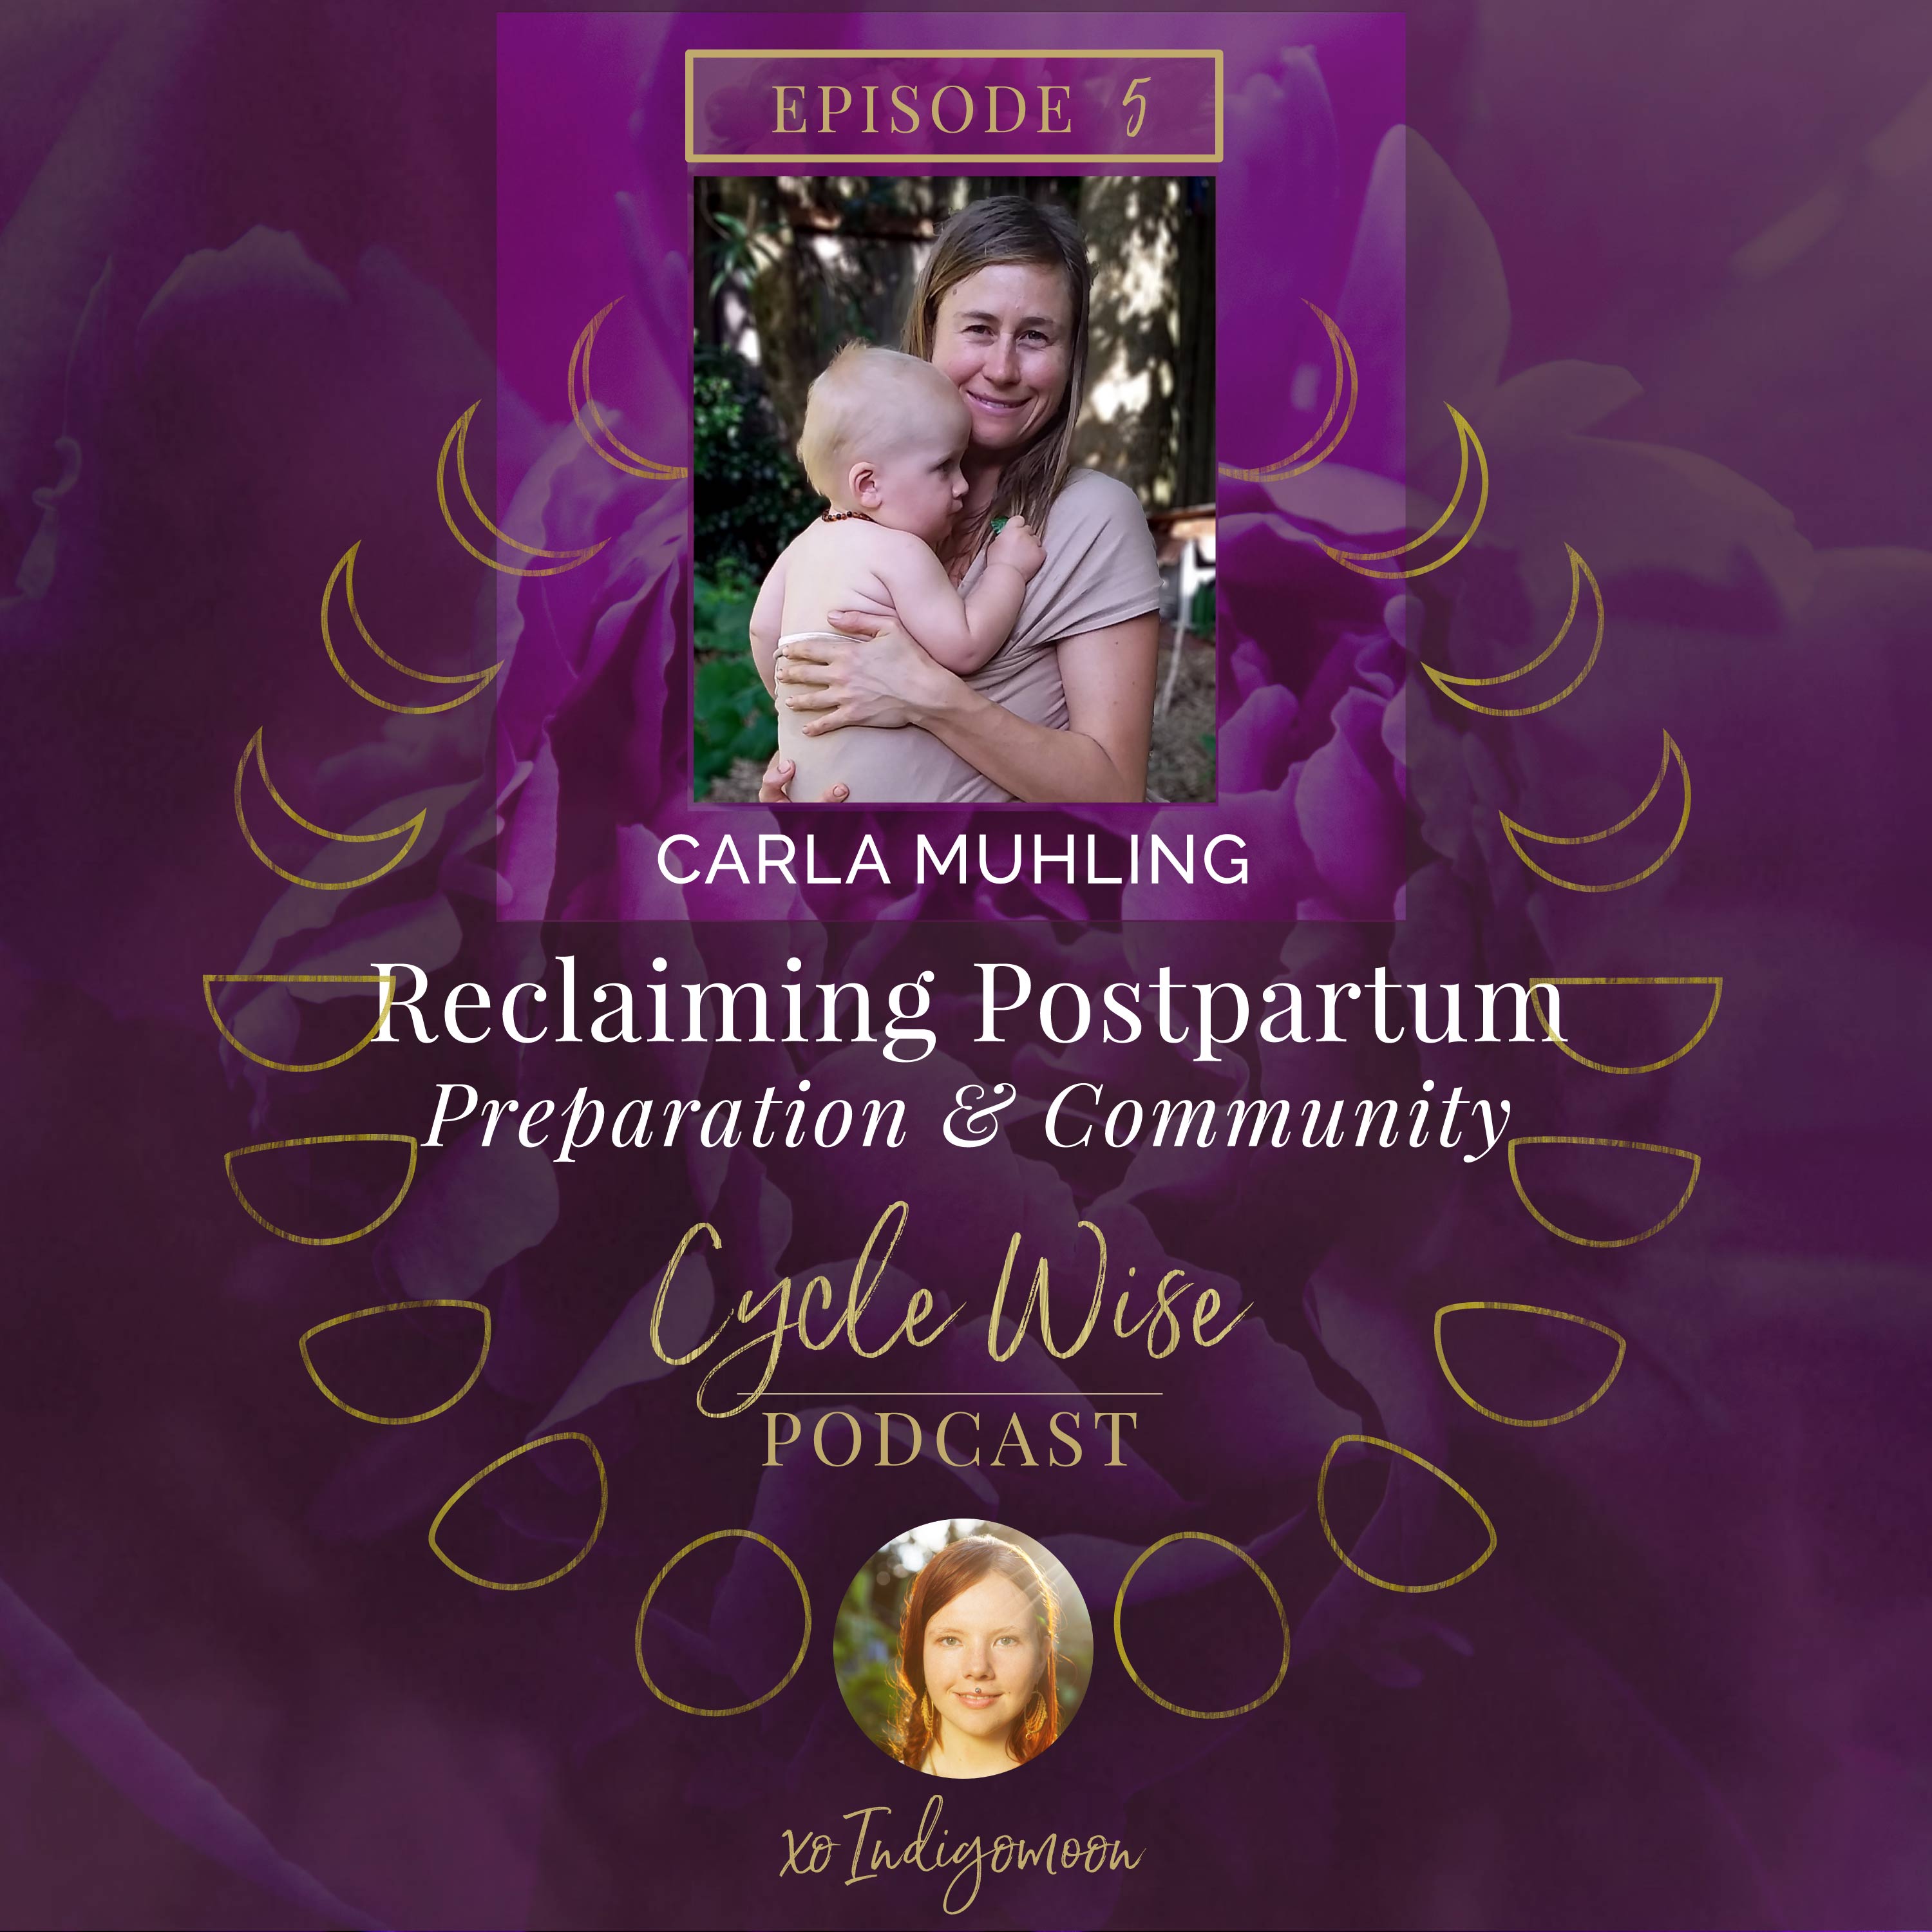 Reclaiming Postpartum – Preparation & Community with Carla Muhling